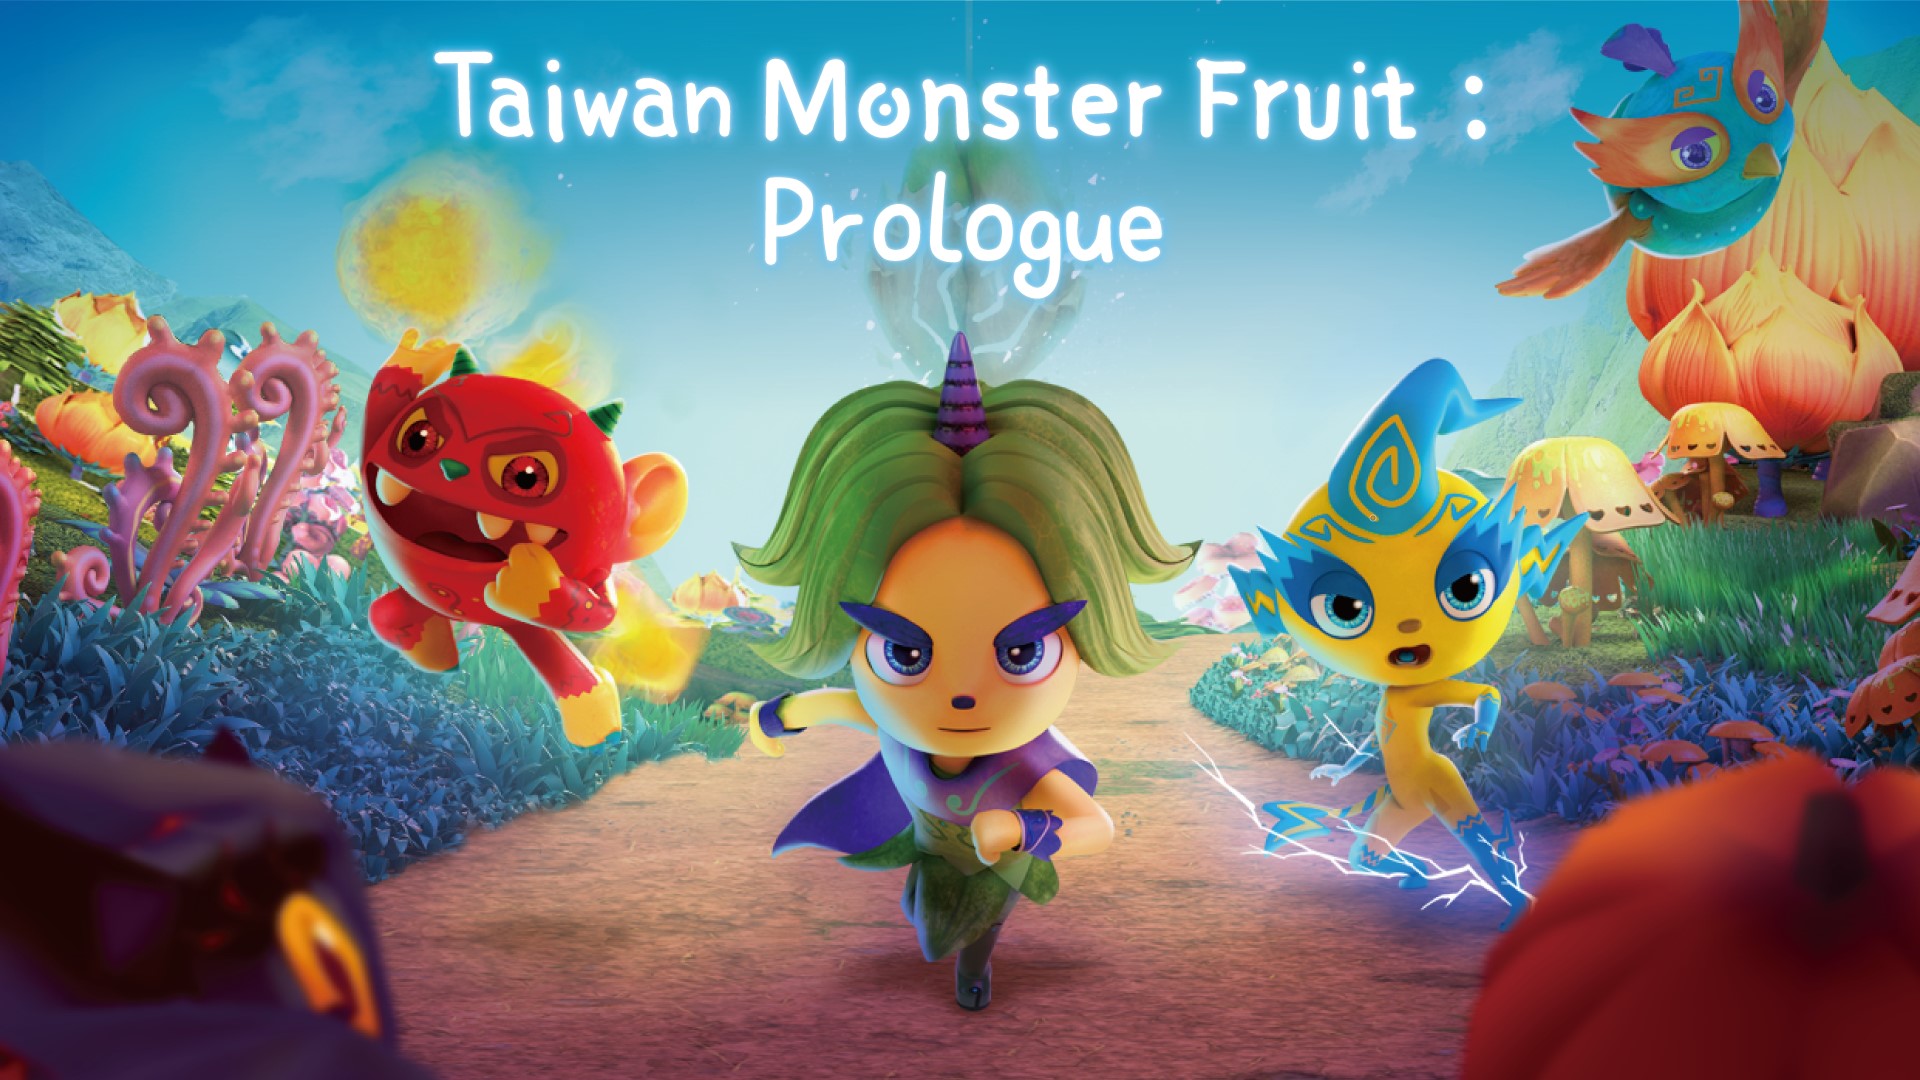 Taiwan Monster Fruit